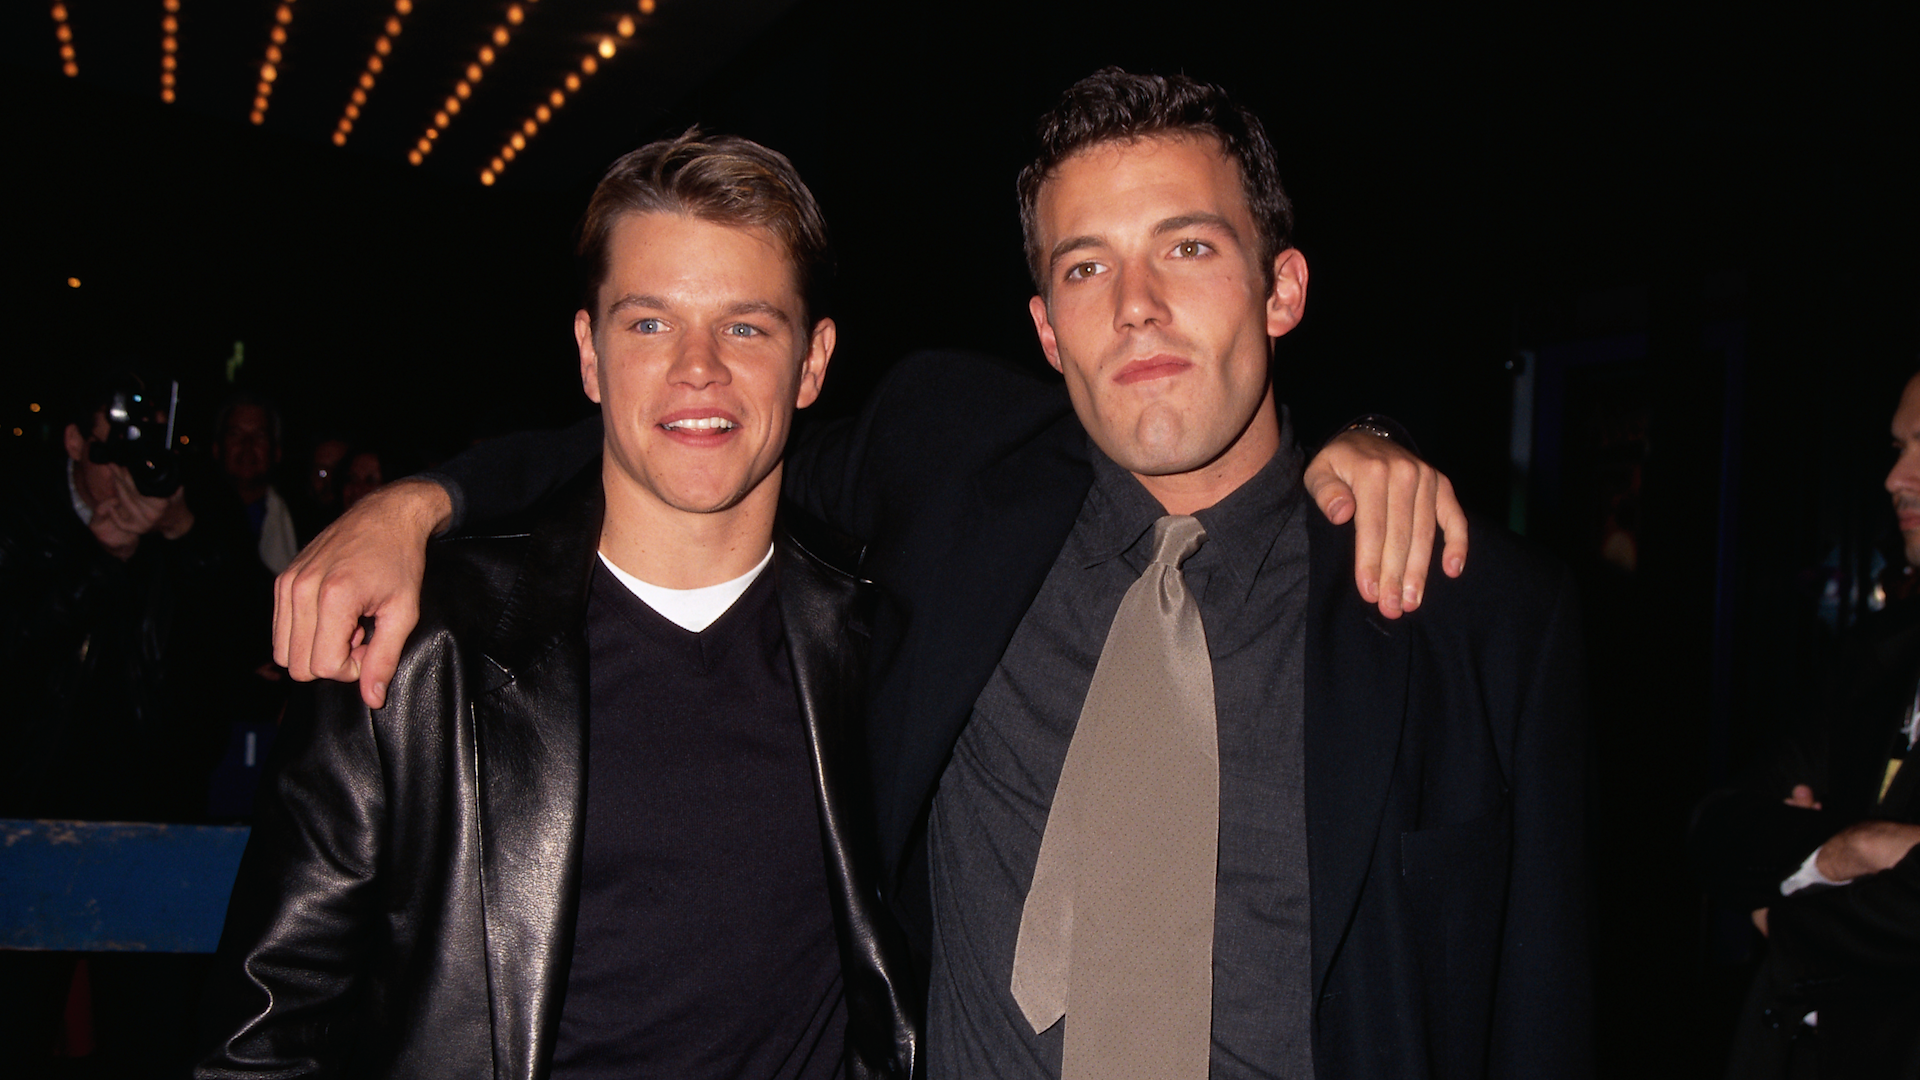 Matt Damon says Ben Affleck saved him from getting beat up in high school - Yahoo Entertainment